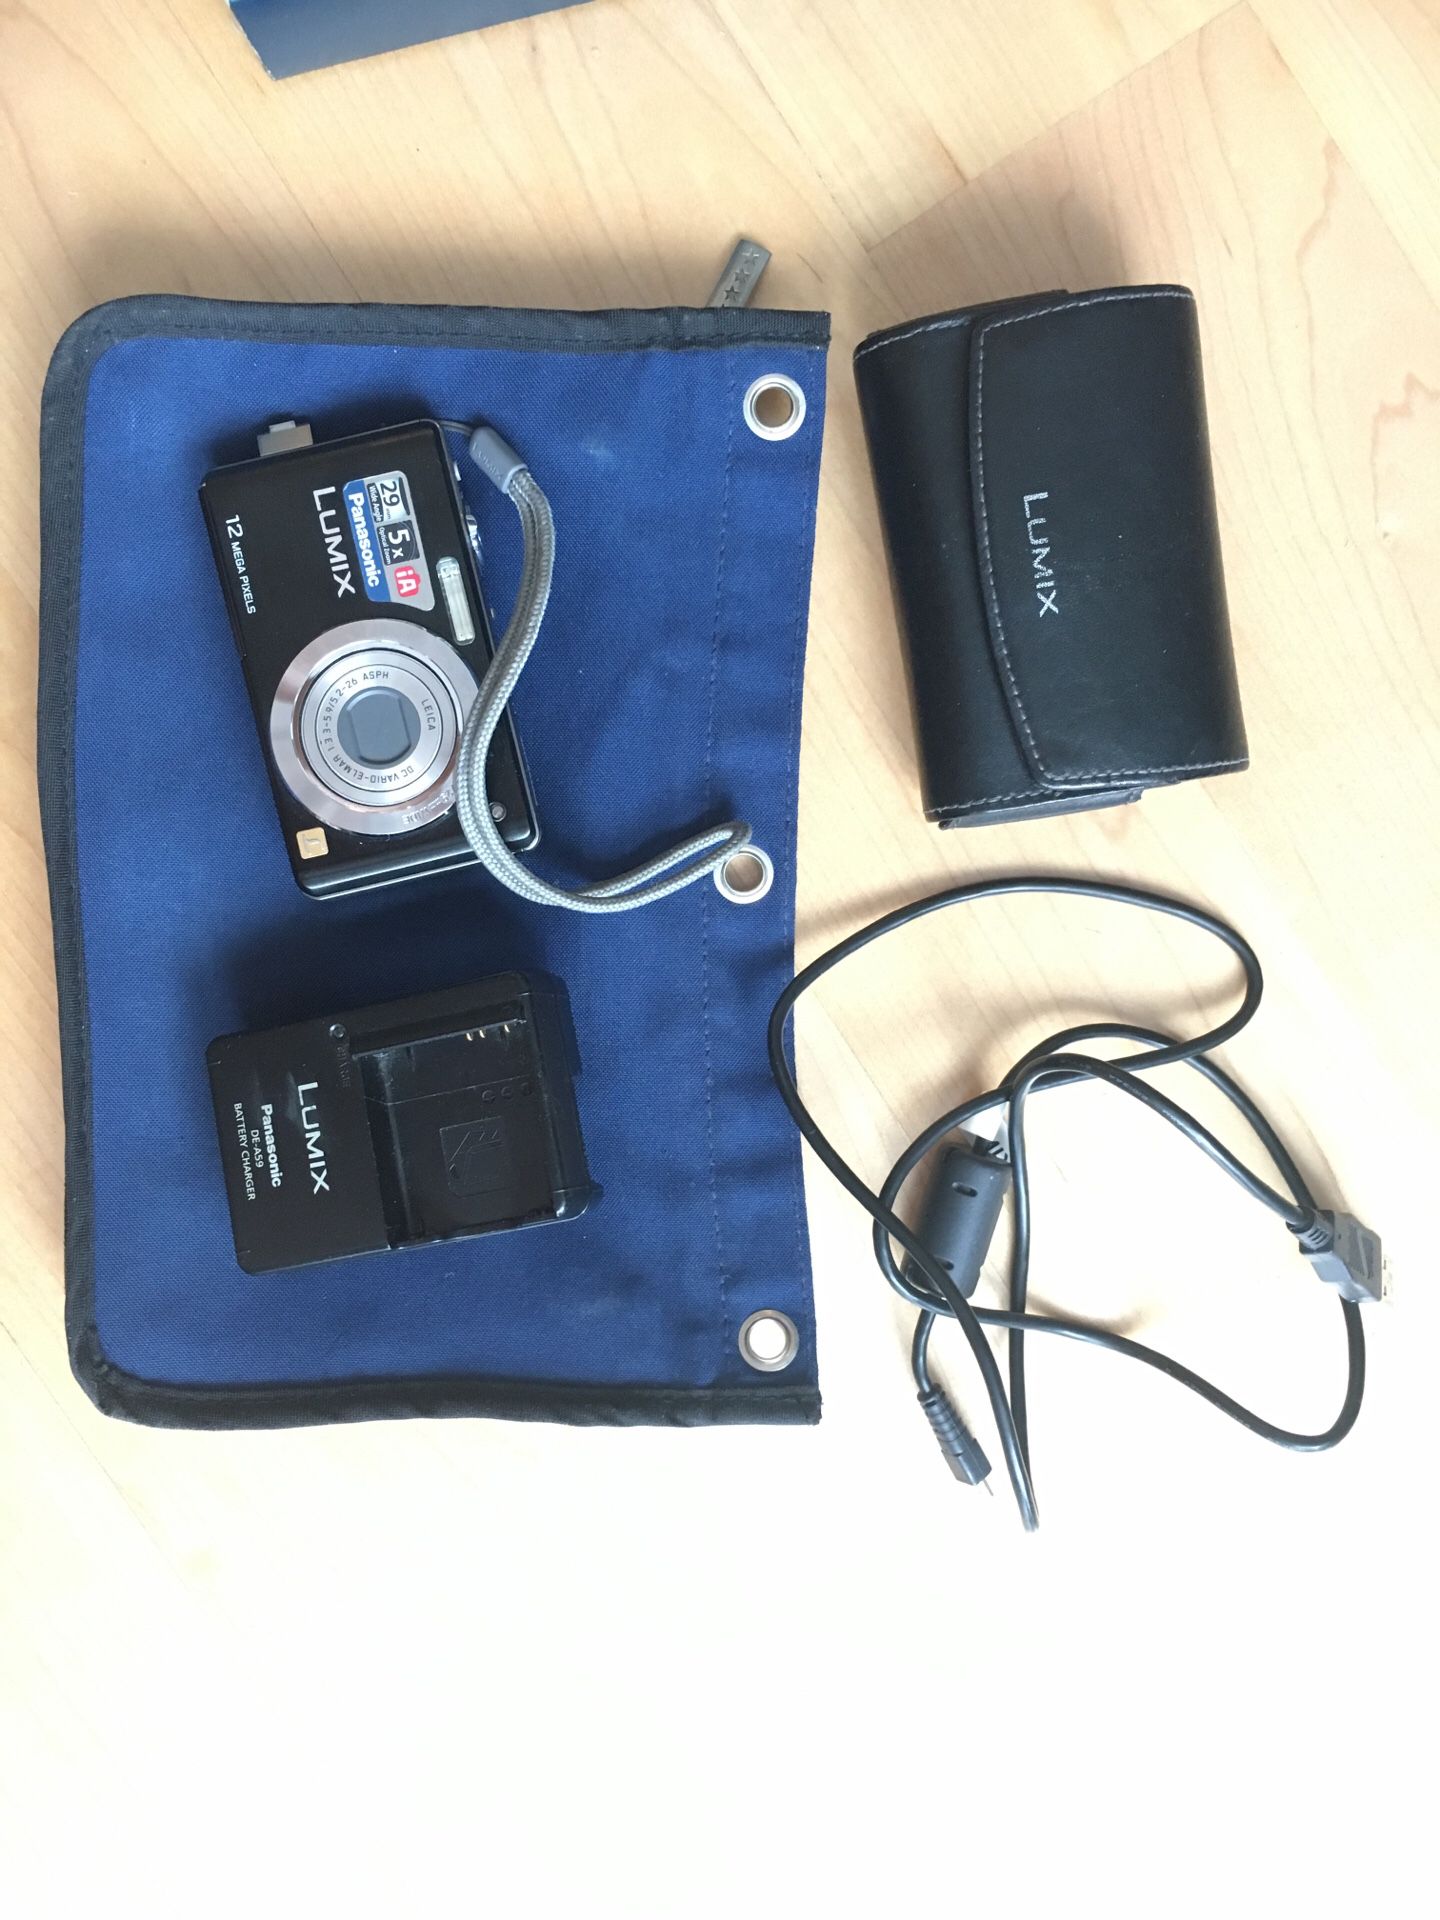 Panasonic digital camera with accessories